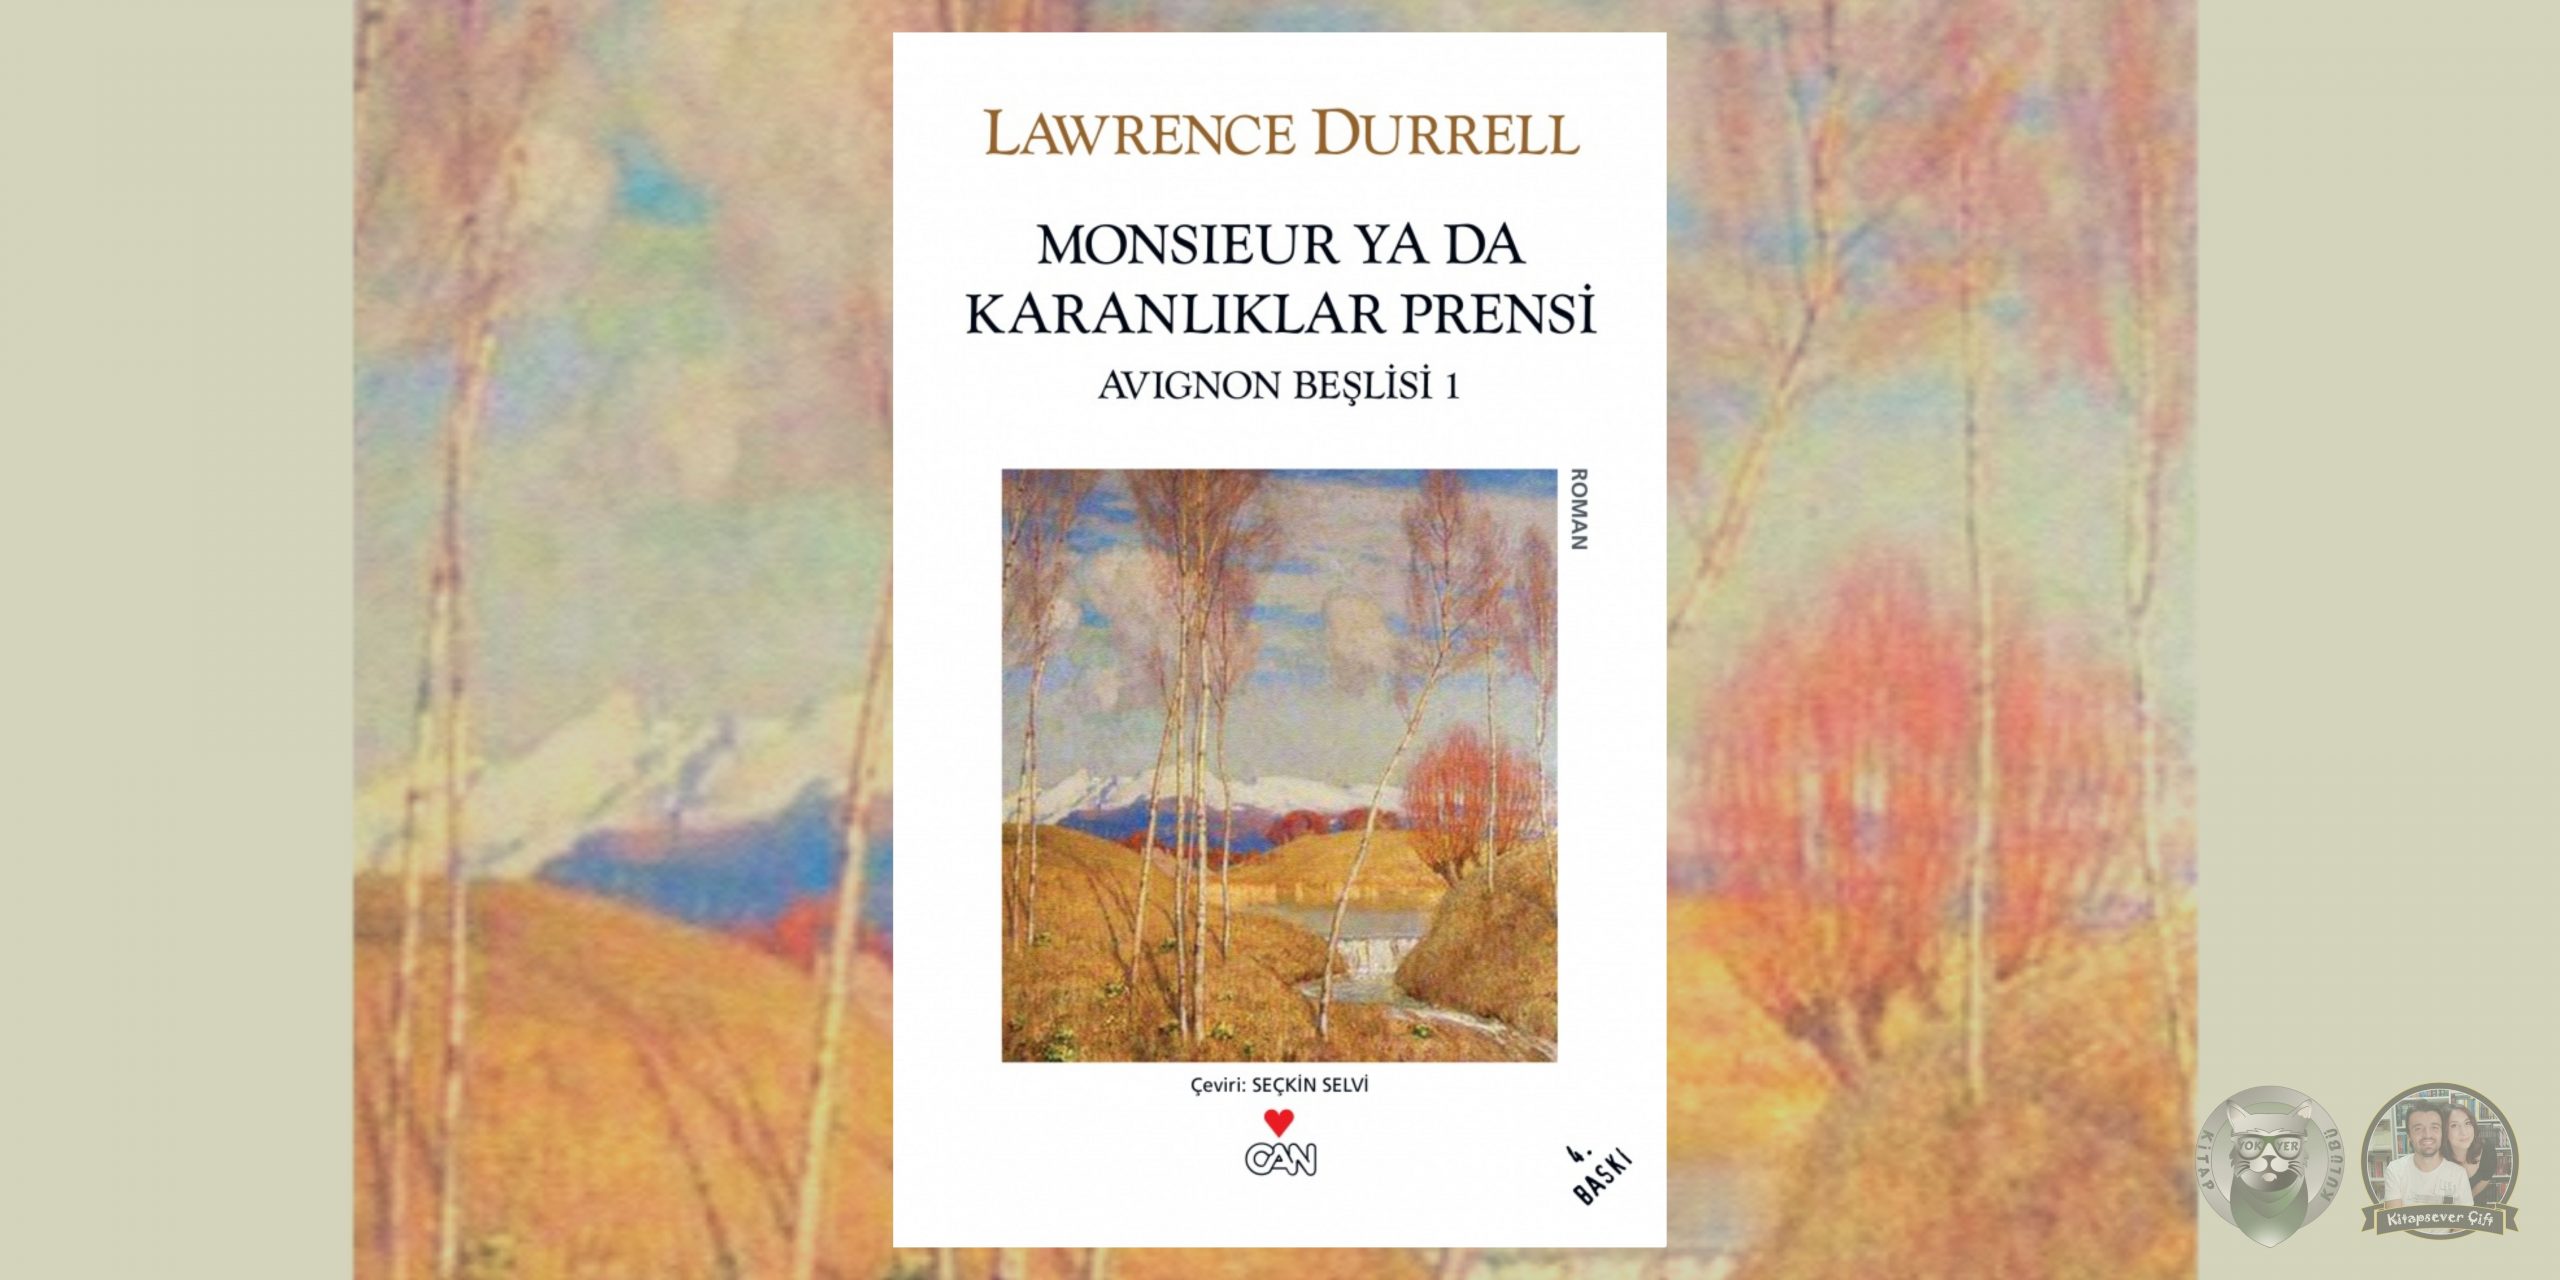 lawrence durrell - avignon beşlisi 1 – monsieur ya da karanliklar prensi scaled